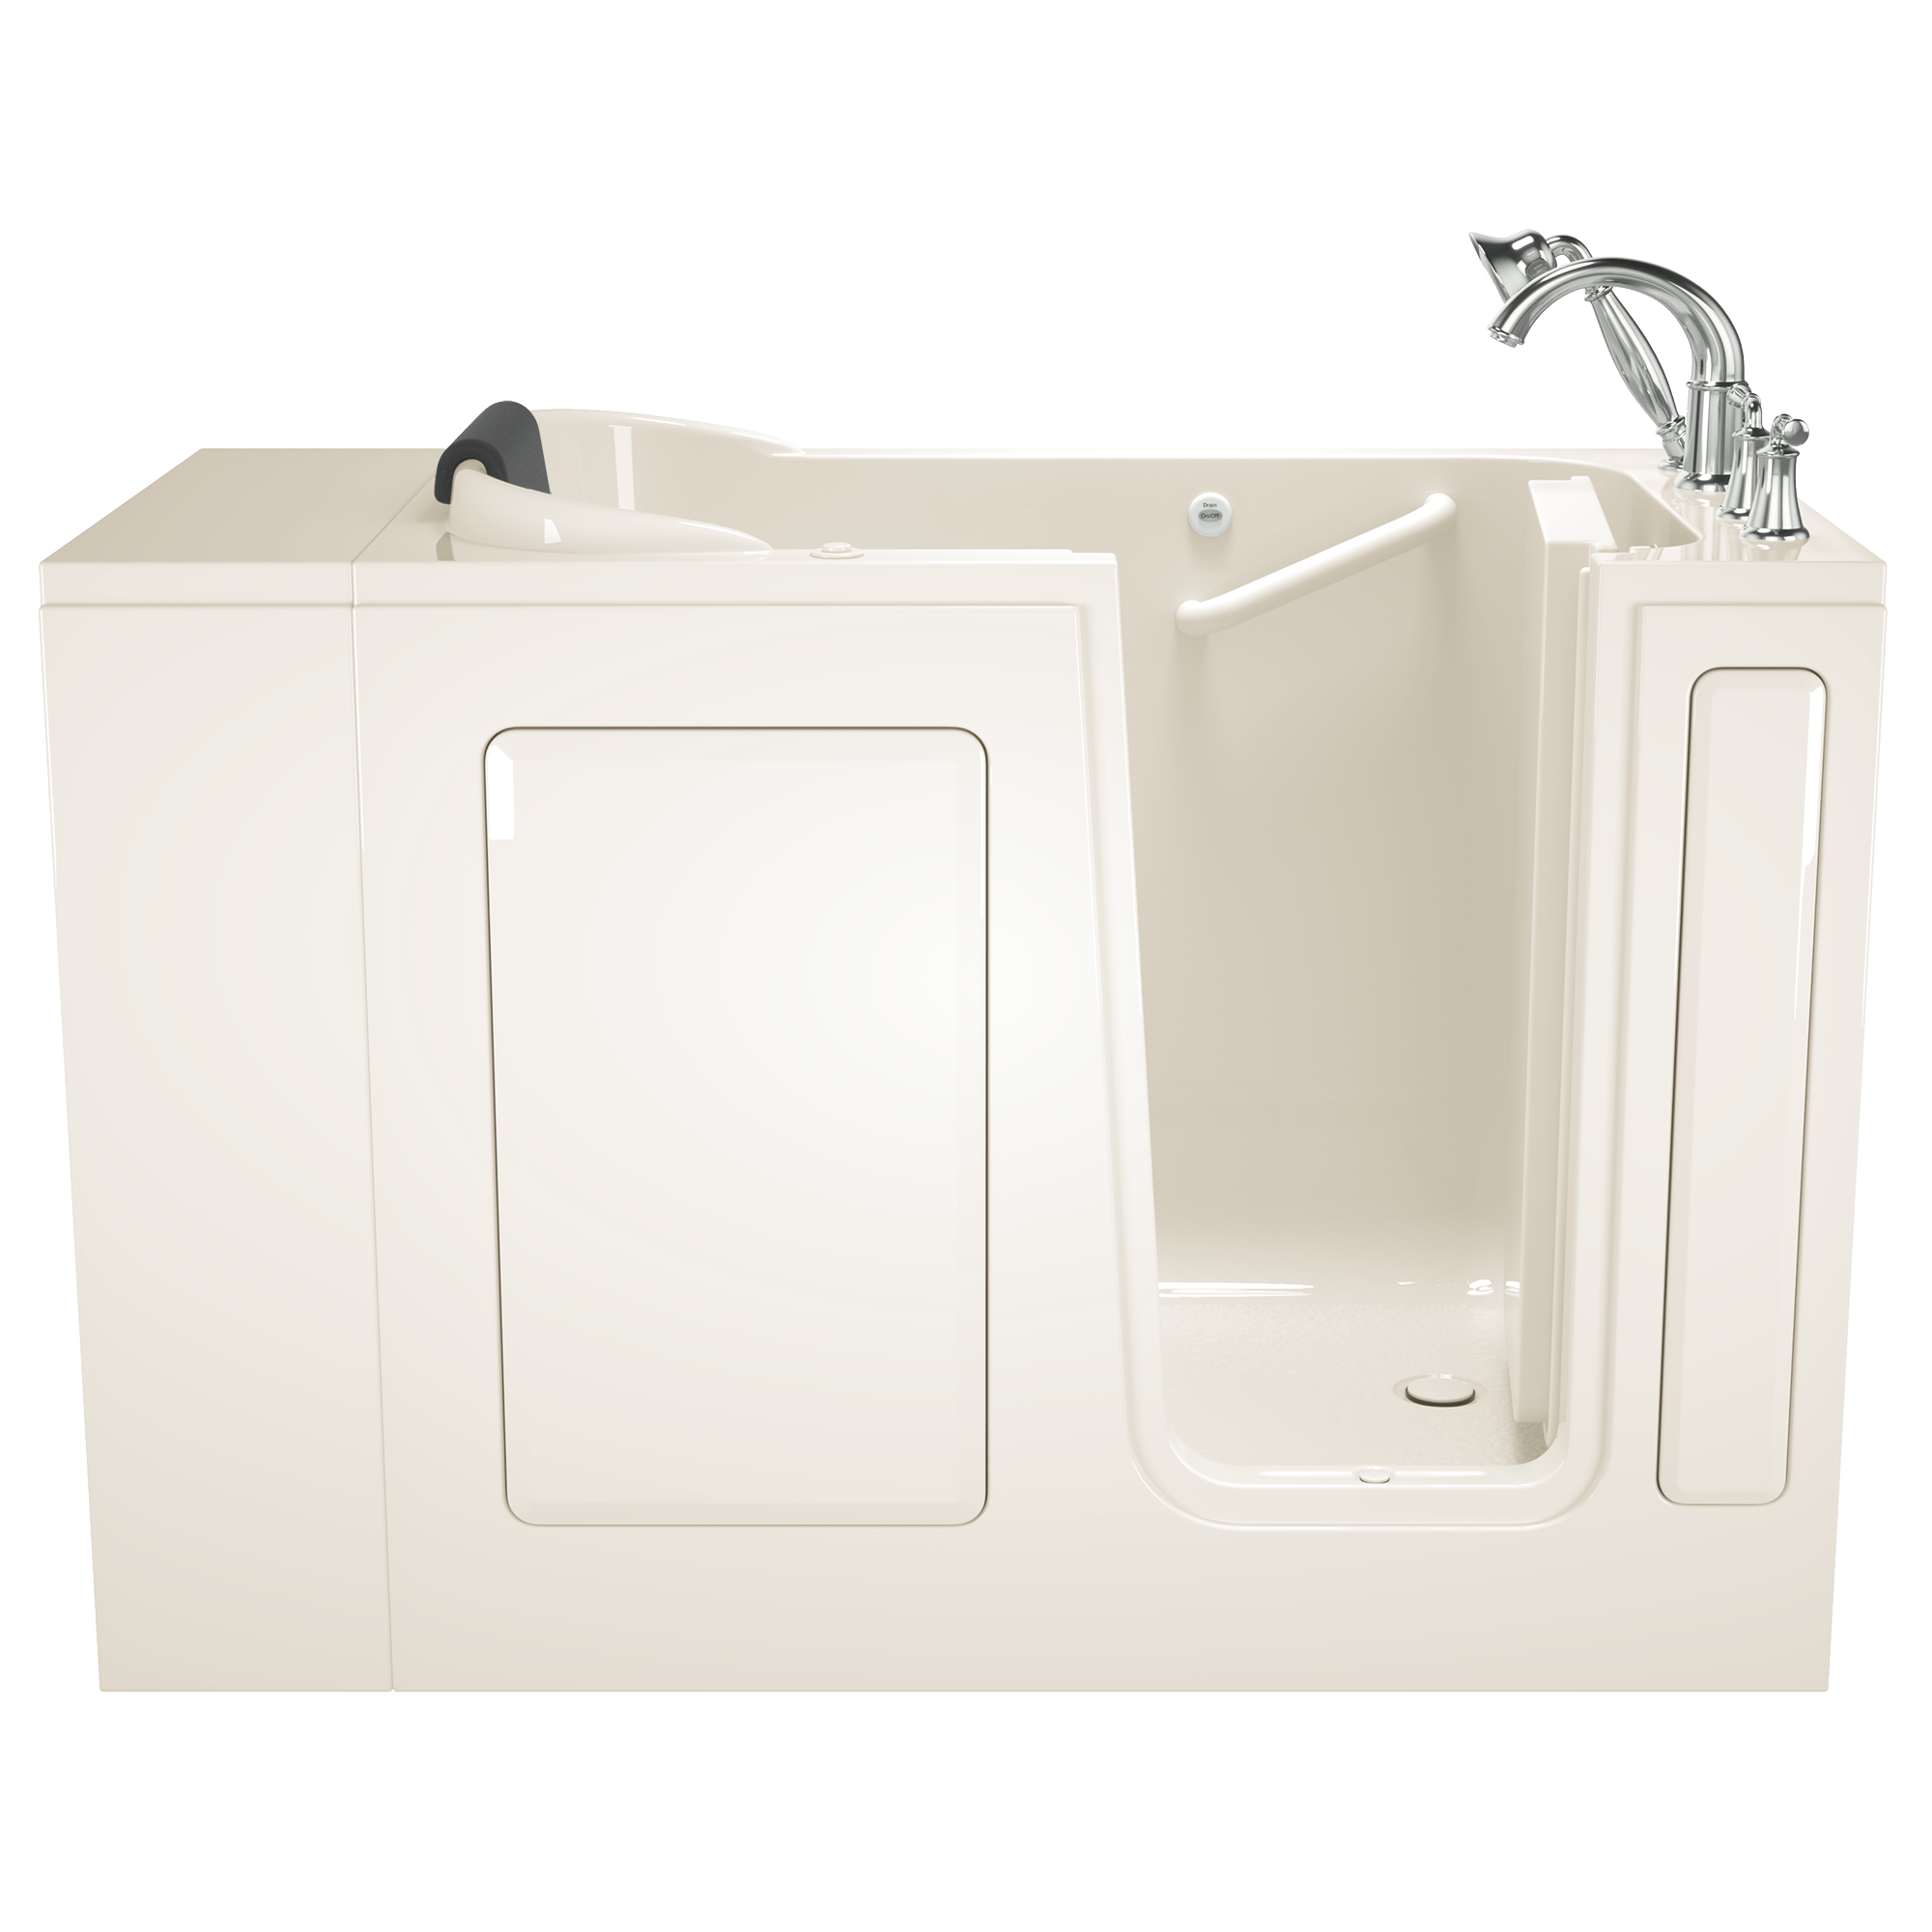 Gelcoat Premium Series 48x28 Inch Walk-In Bathtub with Jet Massage System - Right Hand Door and Drain